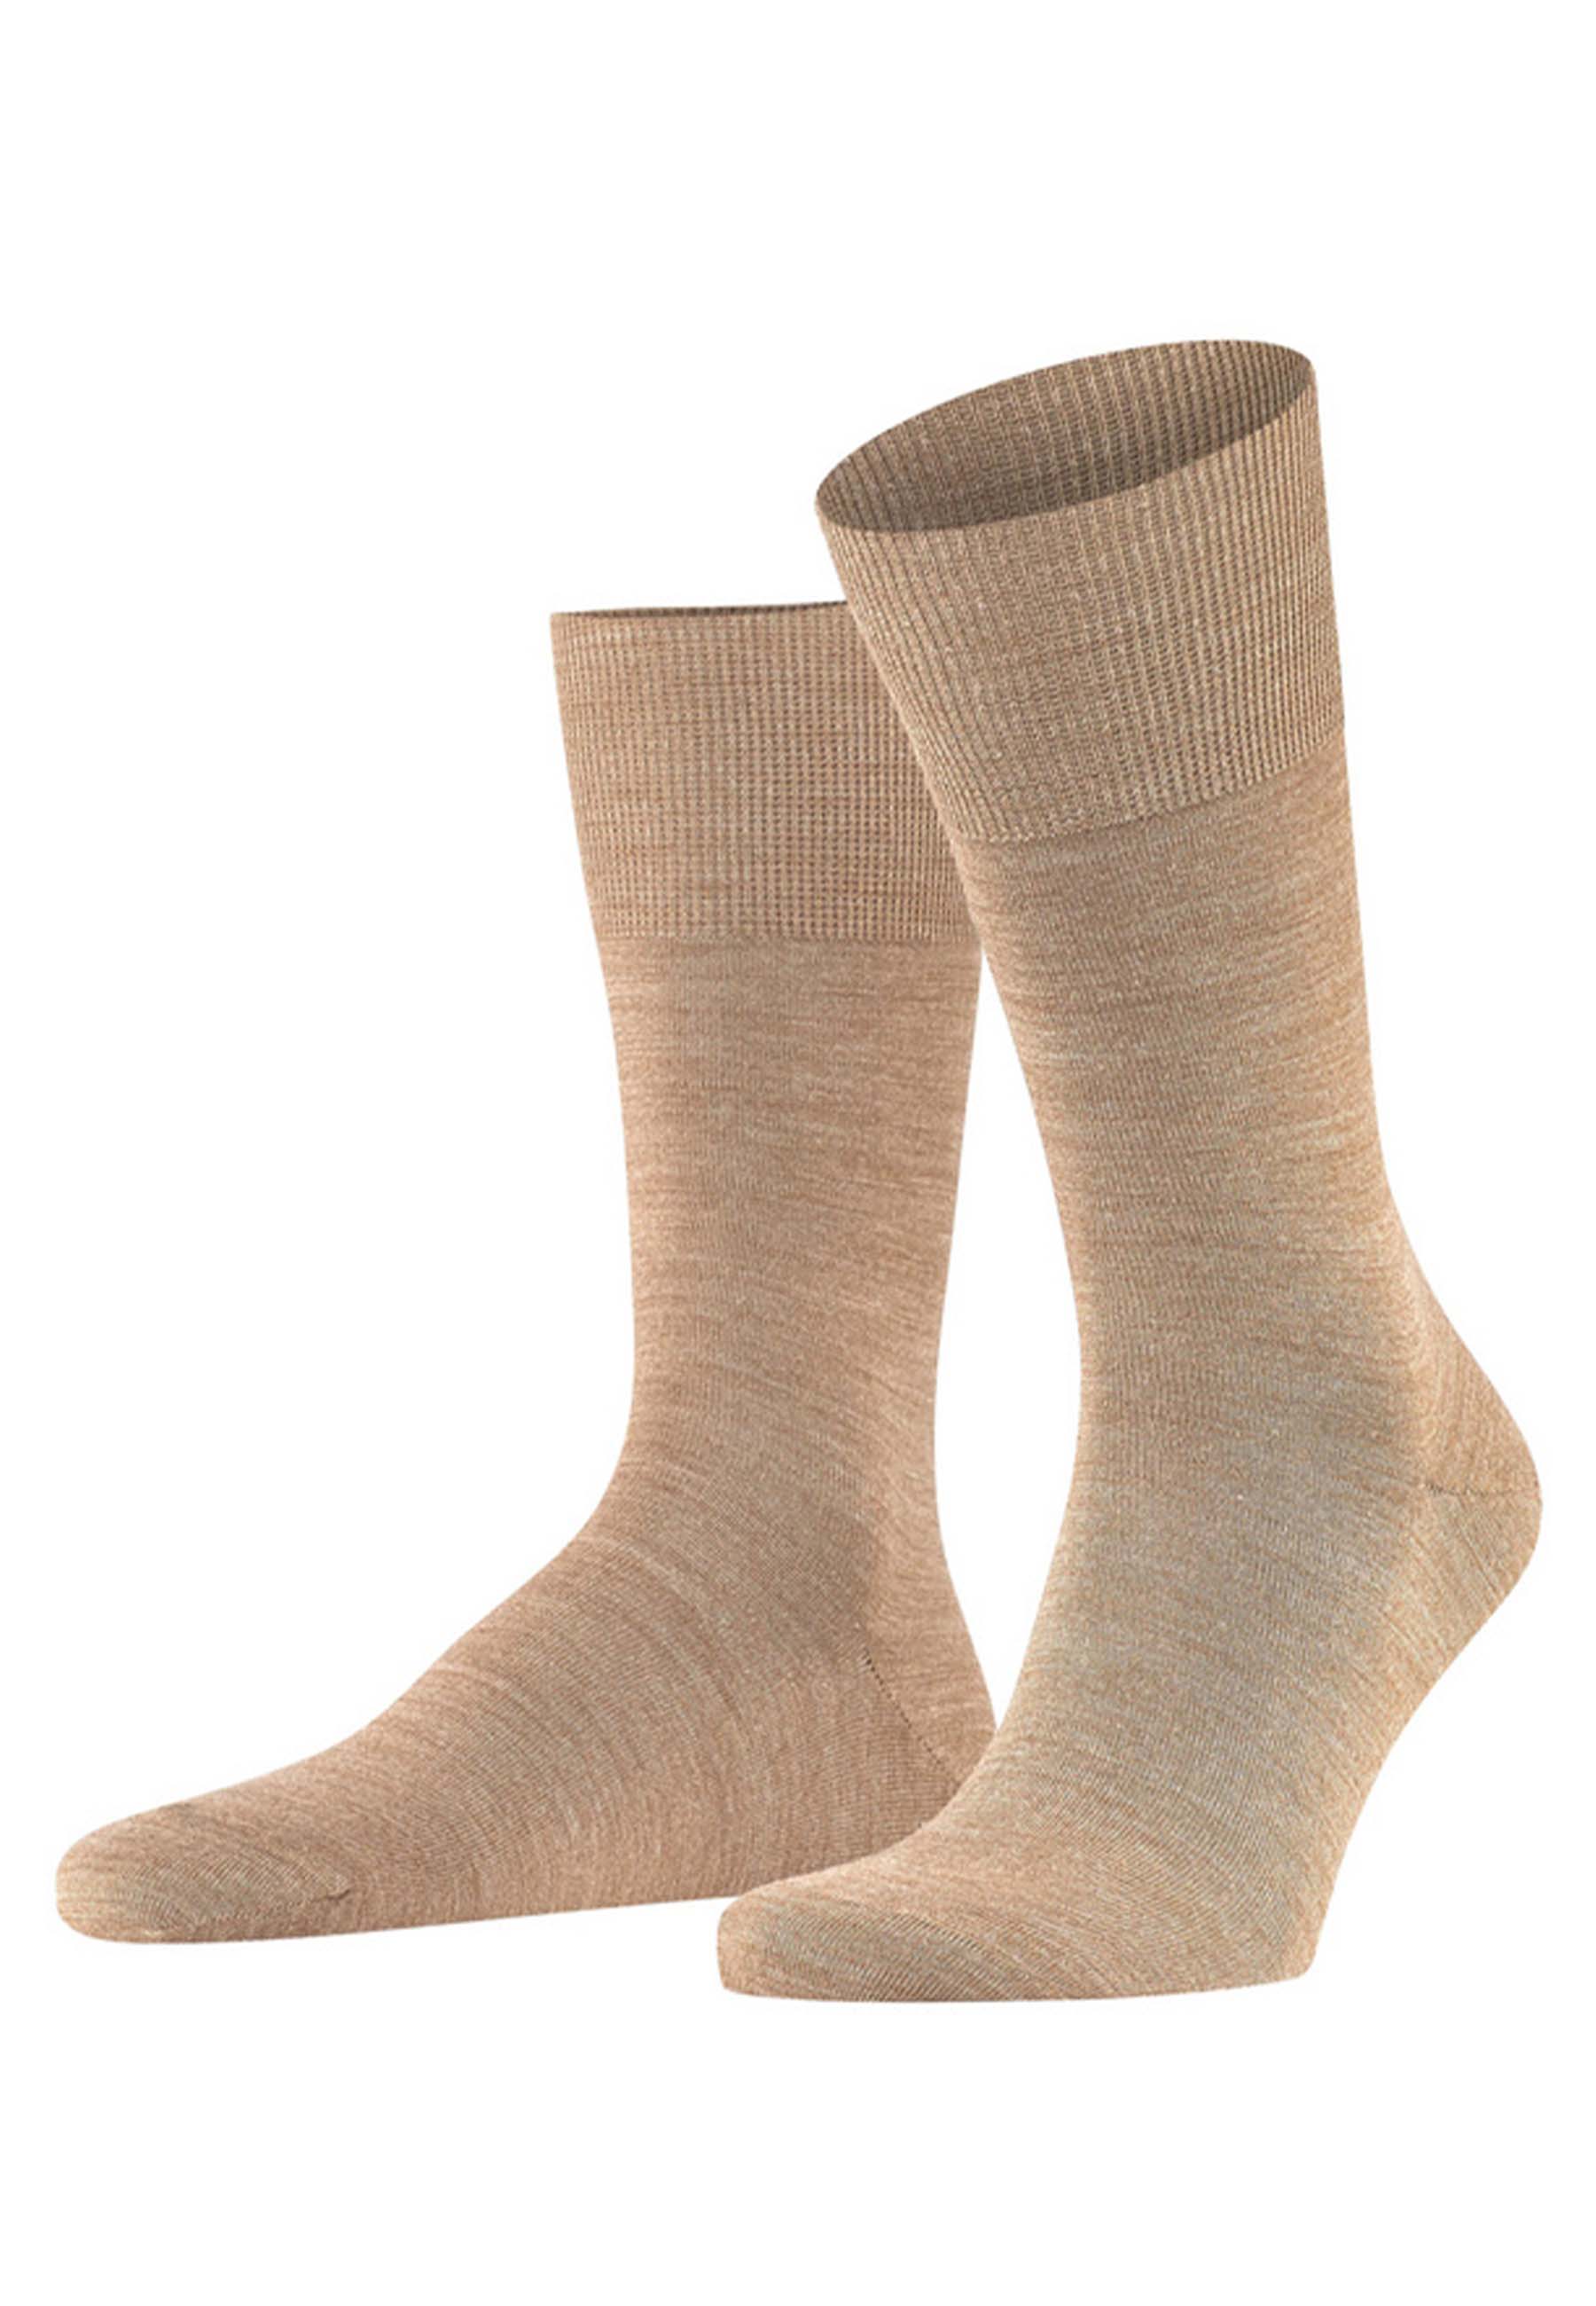 FALKE Sokken Taupe Wol maat 45-46 hoge sokken taupe